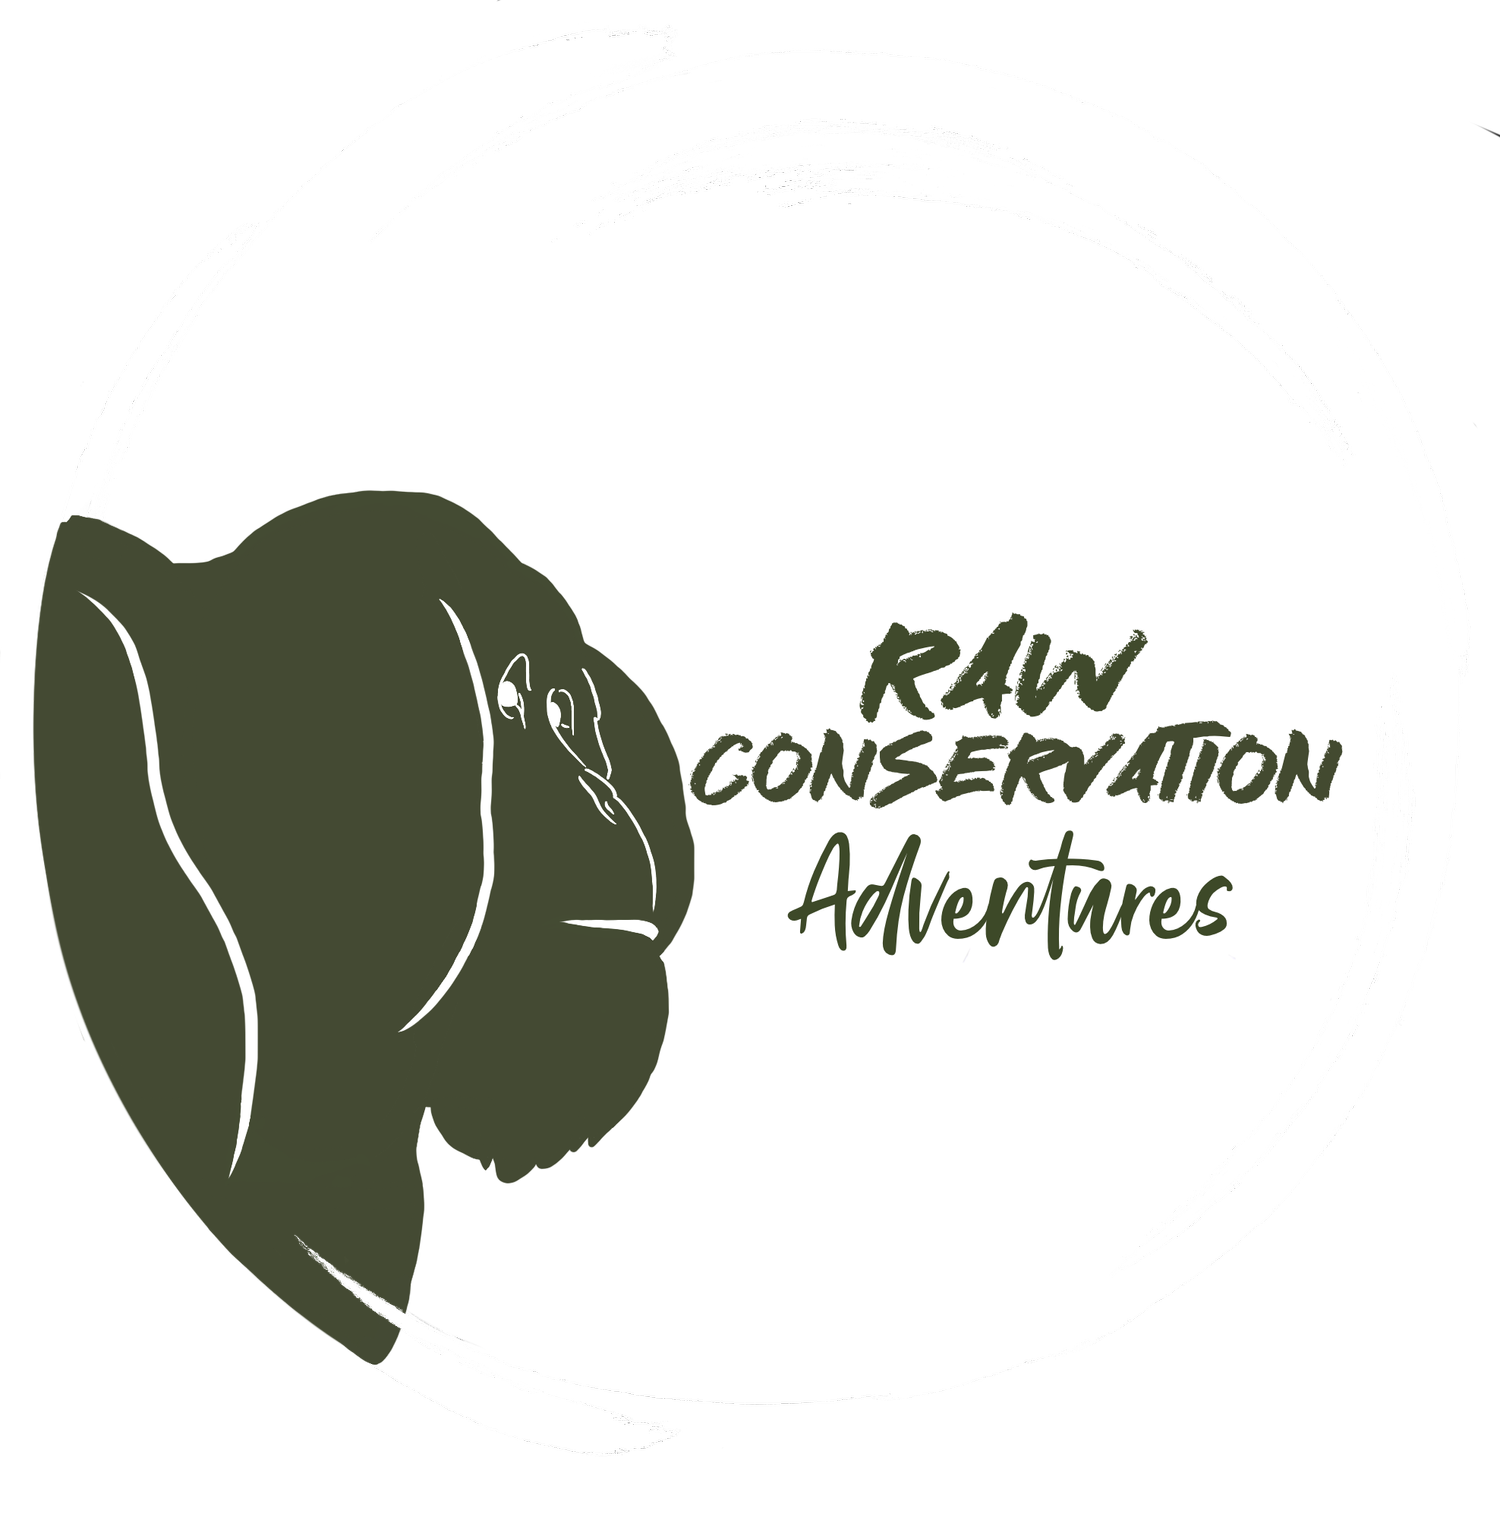 RAW Conservation Adventures